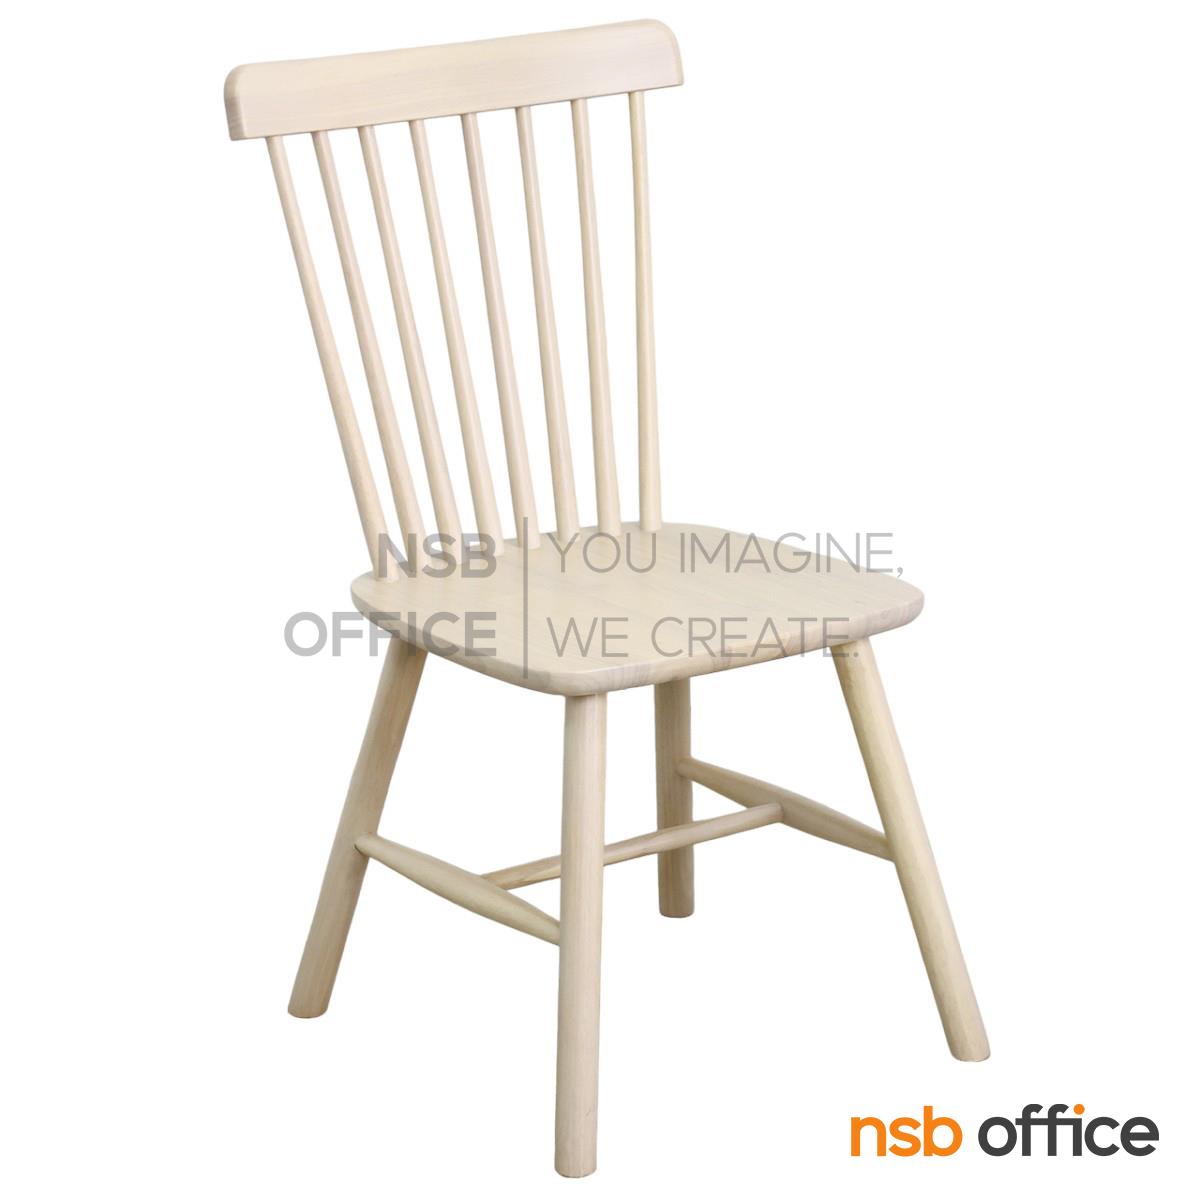 B22A234:เก้าอี้ไม้ยางพารา รุ่น Anda (อันดา) ขนาด 43W cm. ขาไม้